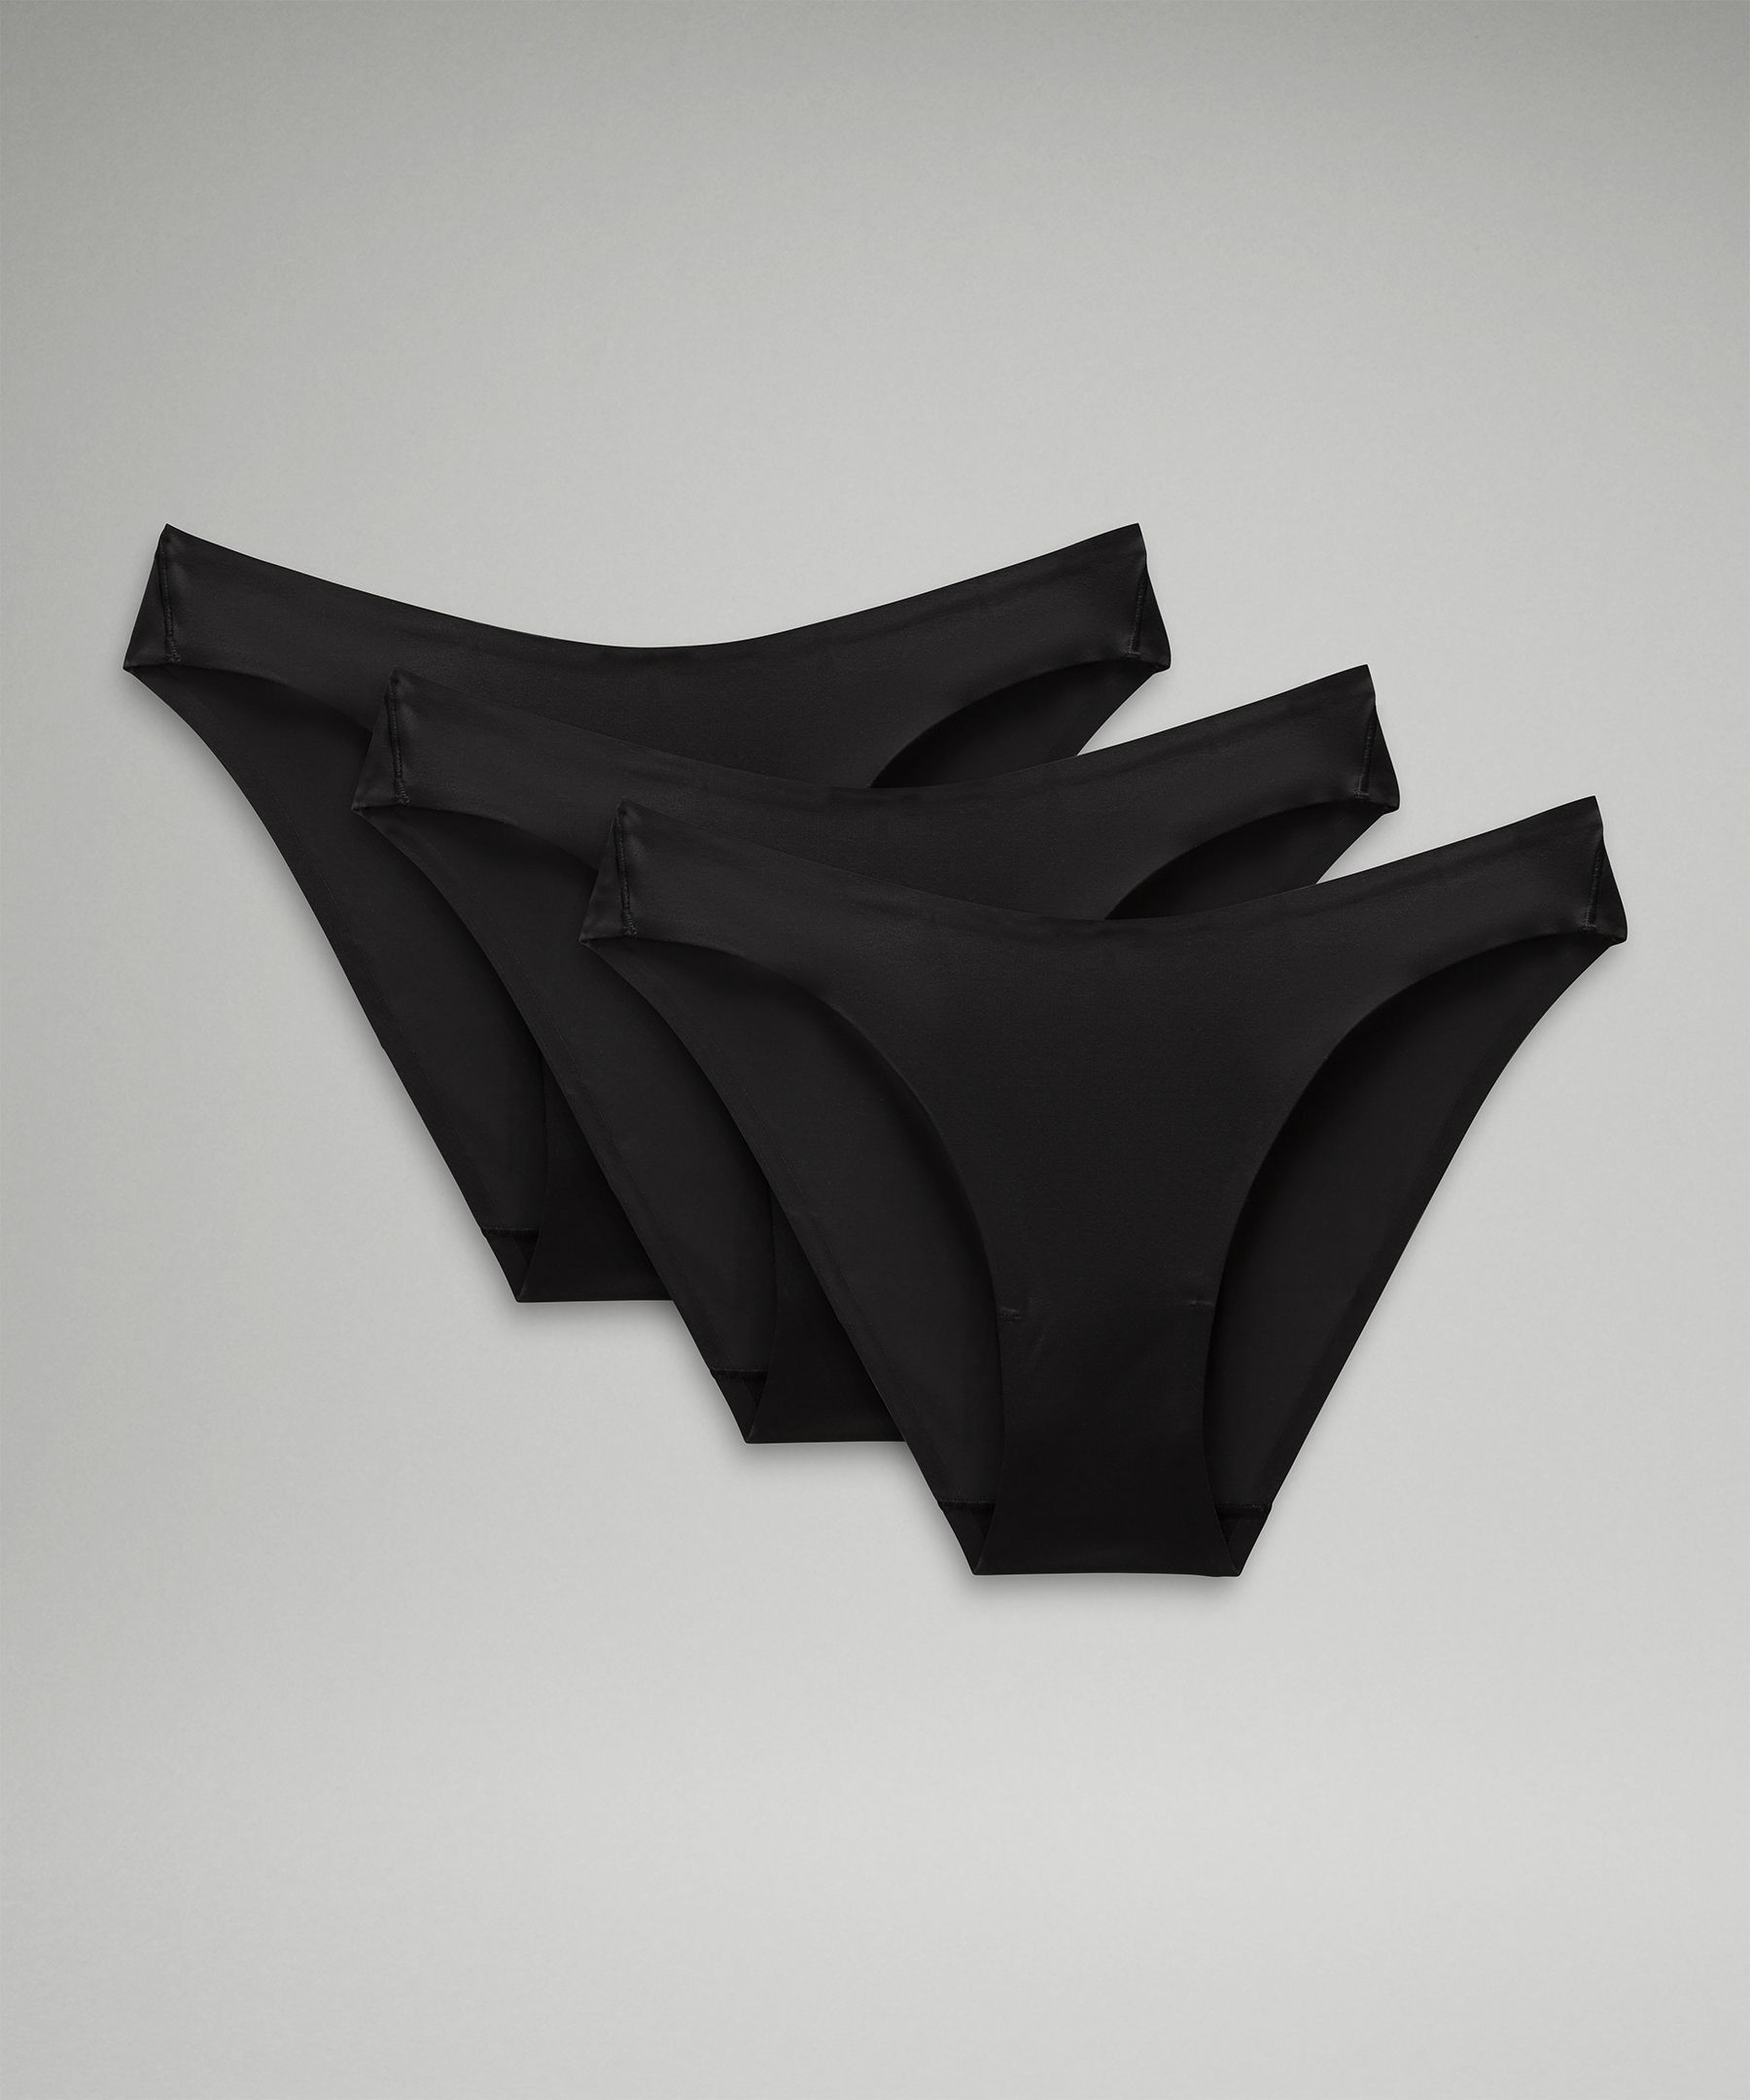 Stylish Panty - Buy Stylish Underwear for Ladies Online